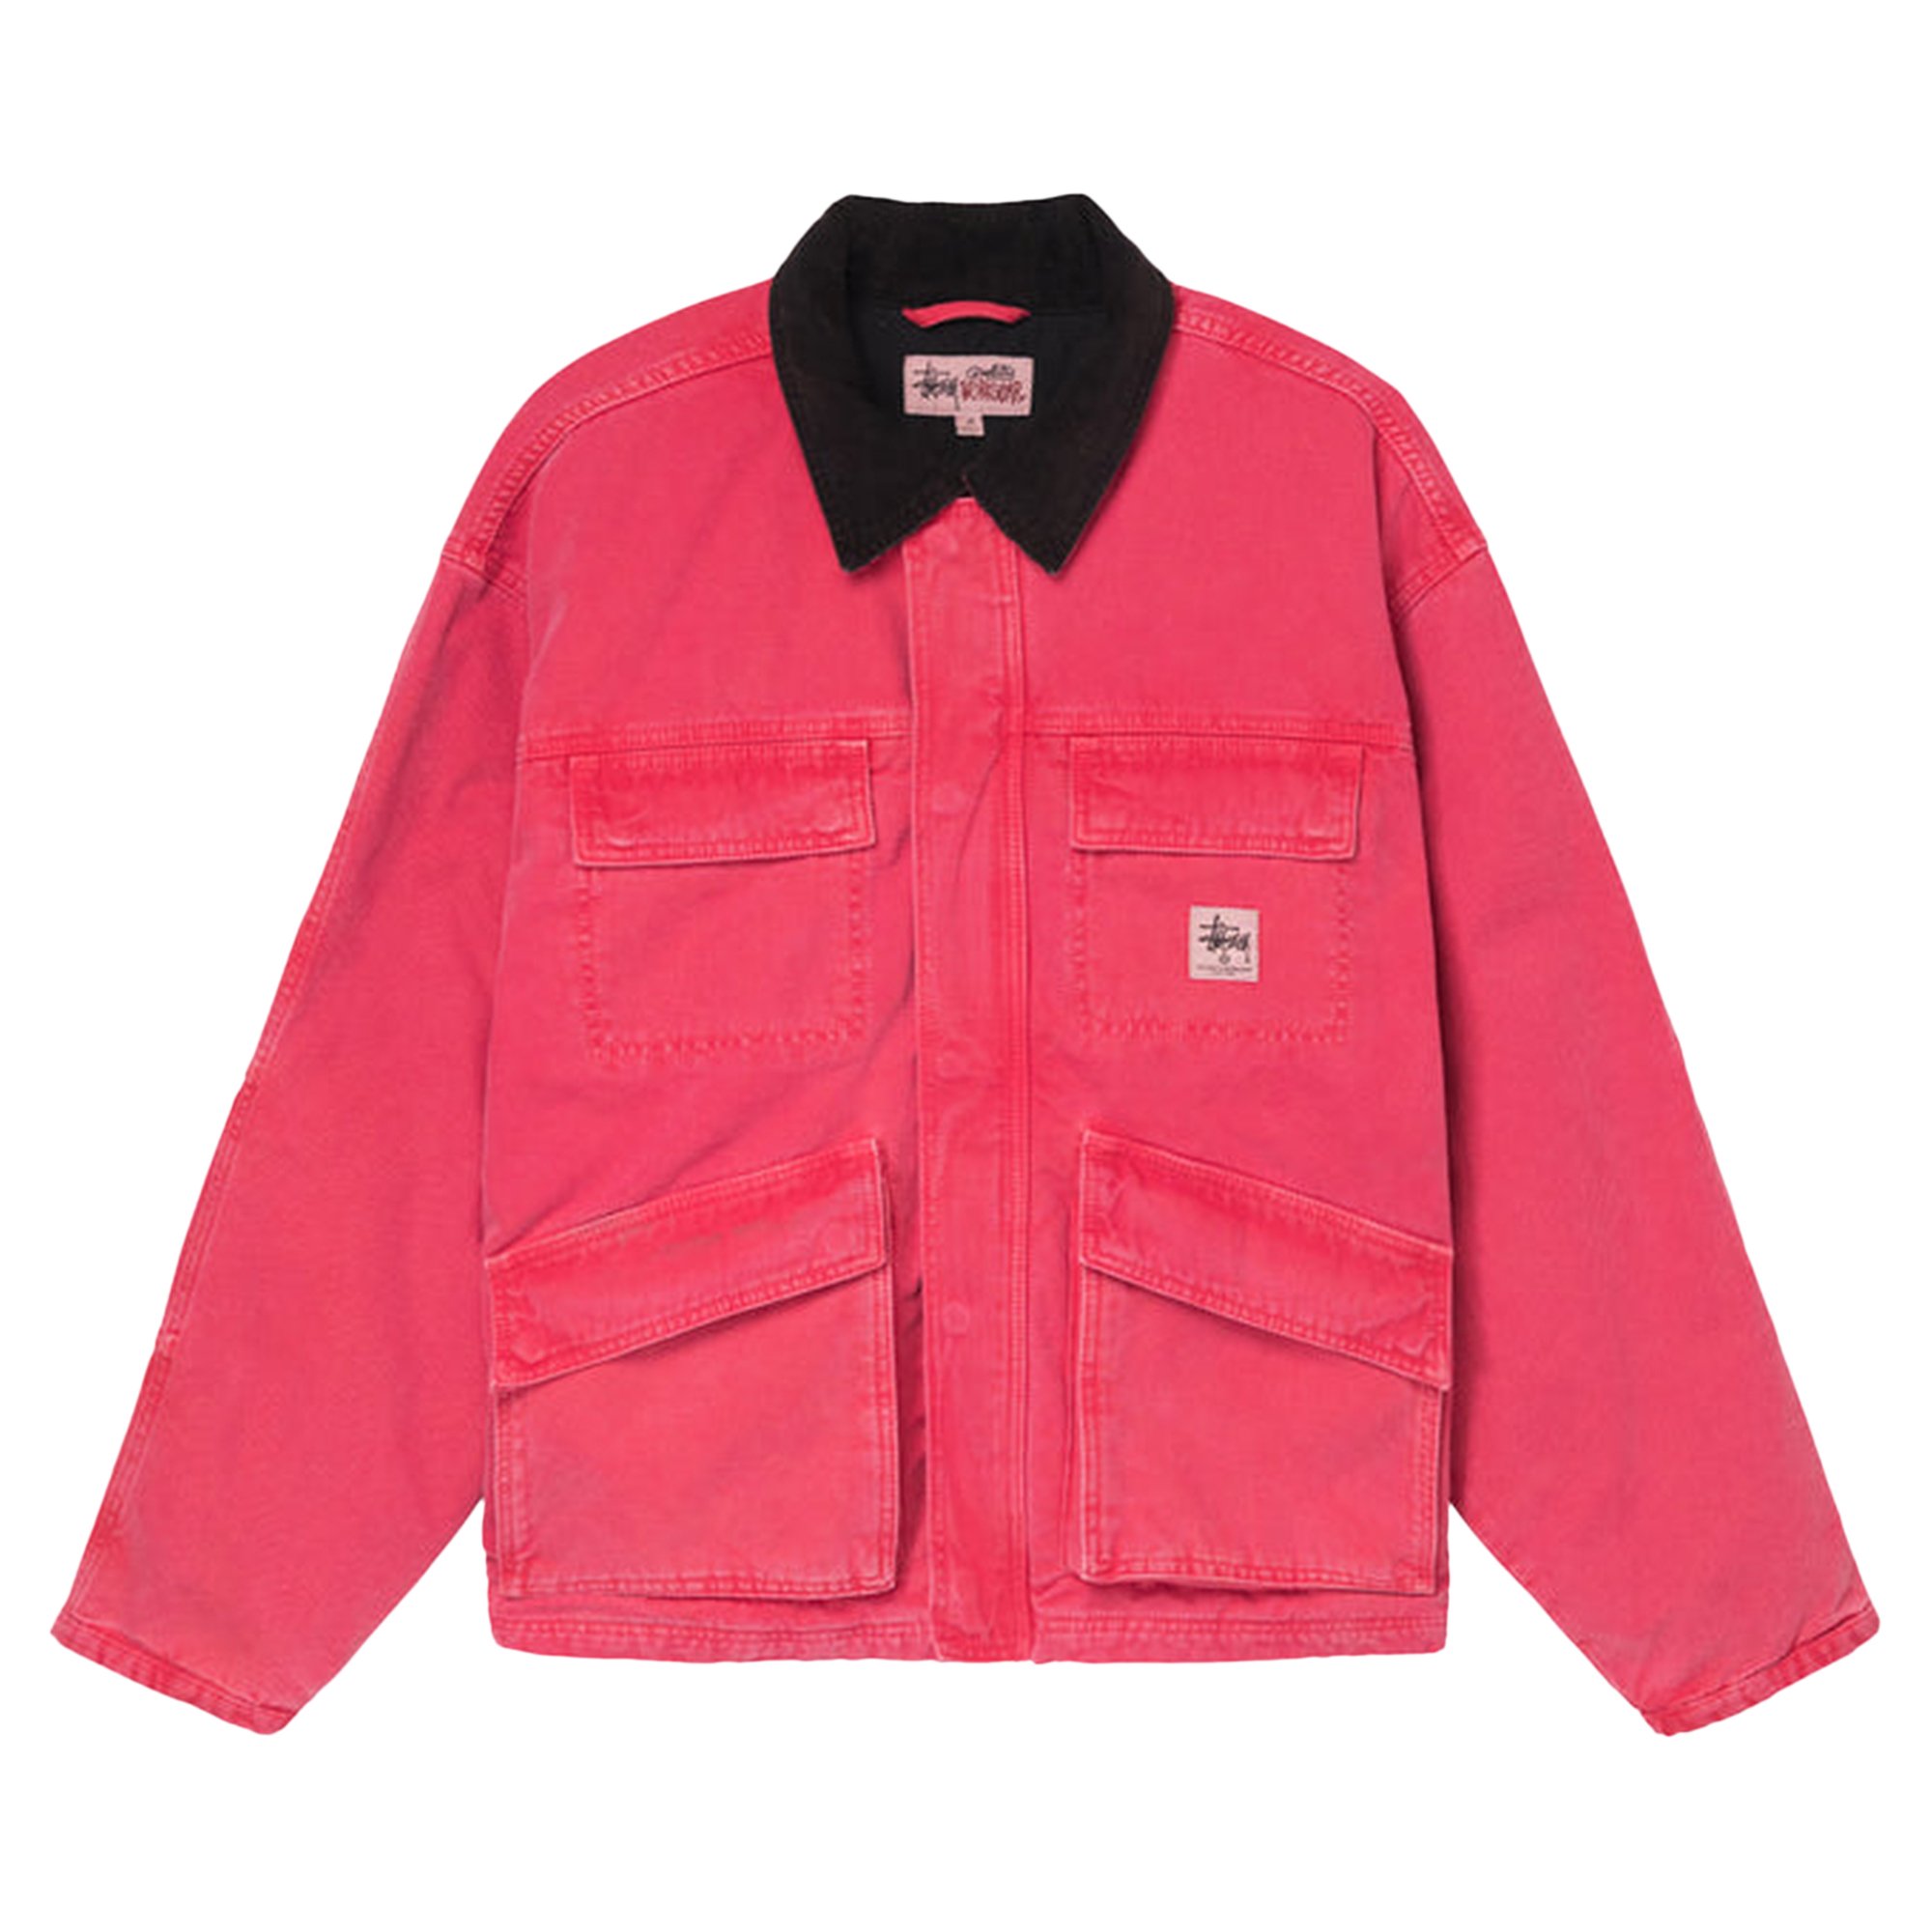 Buy Stussy Washed Canvas Shop Jacket 'Hot Pink' - 115589 HOT | GOAT CA